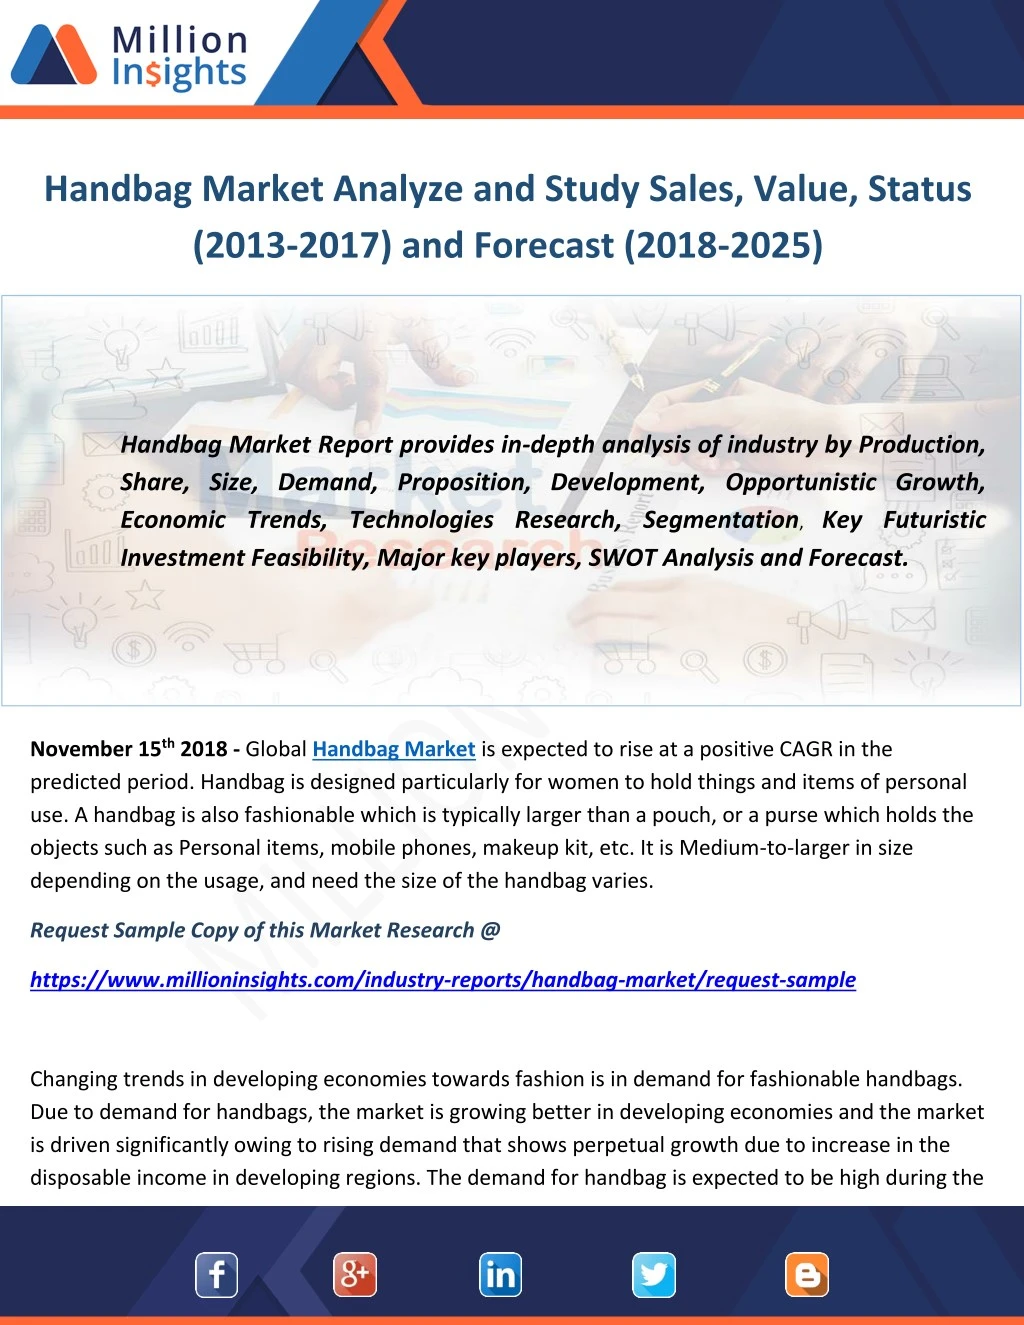 handbag market analyze and study sales value